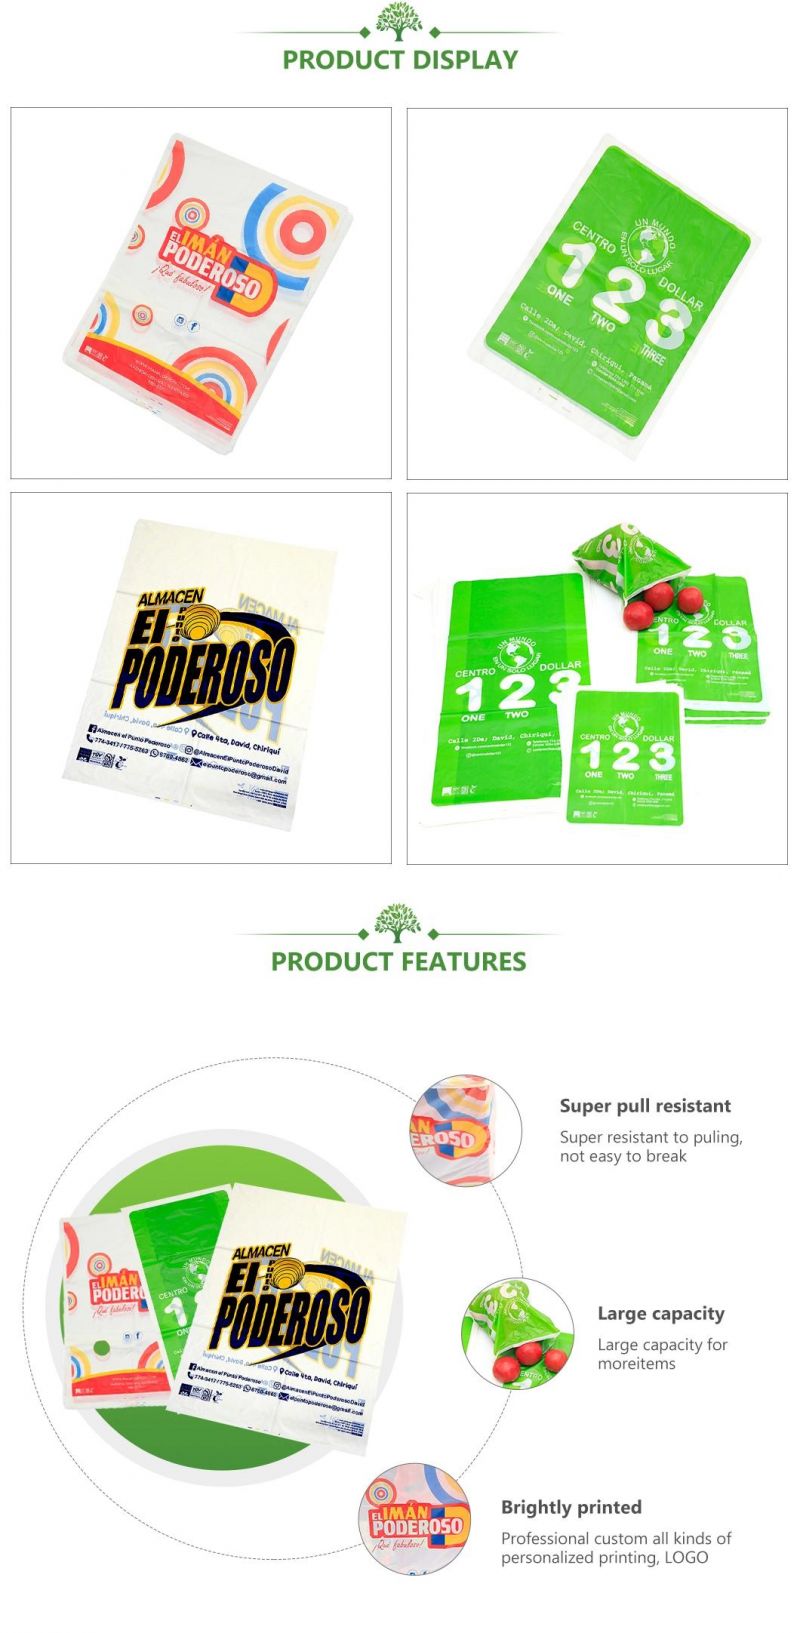 PLA+Pbat/Pbat+Corn Starch Biodegradable Bags, Compostable Bags, Supermarket Bags for Indoor